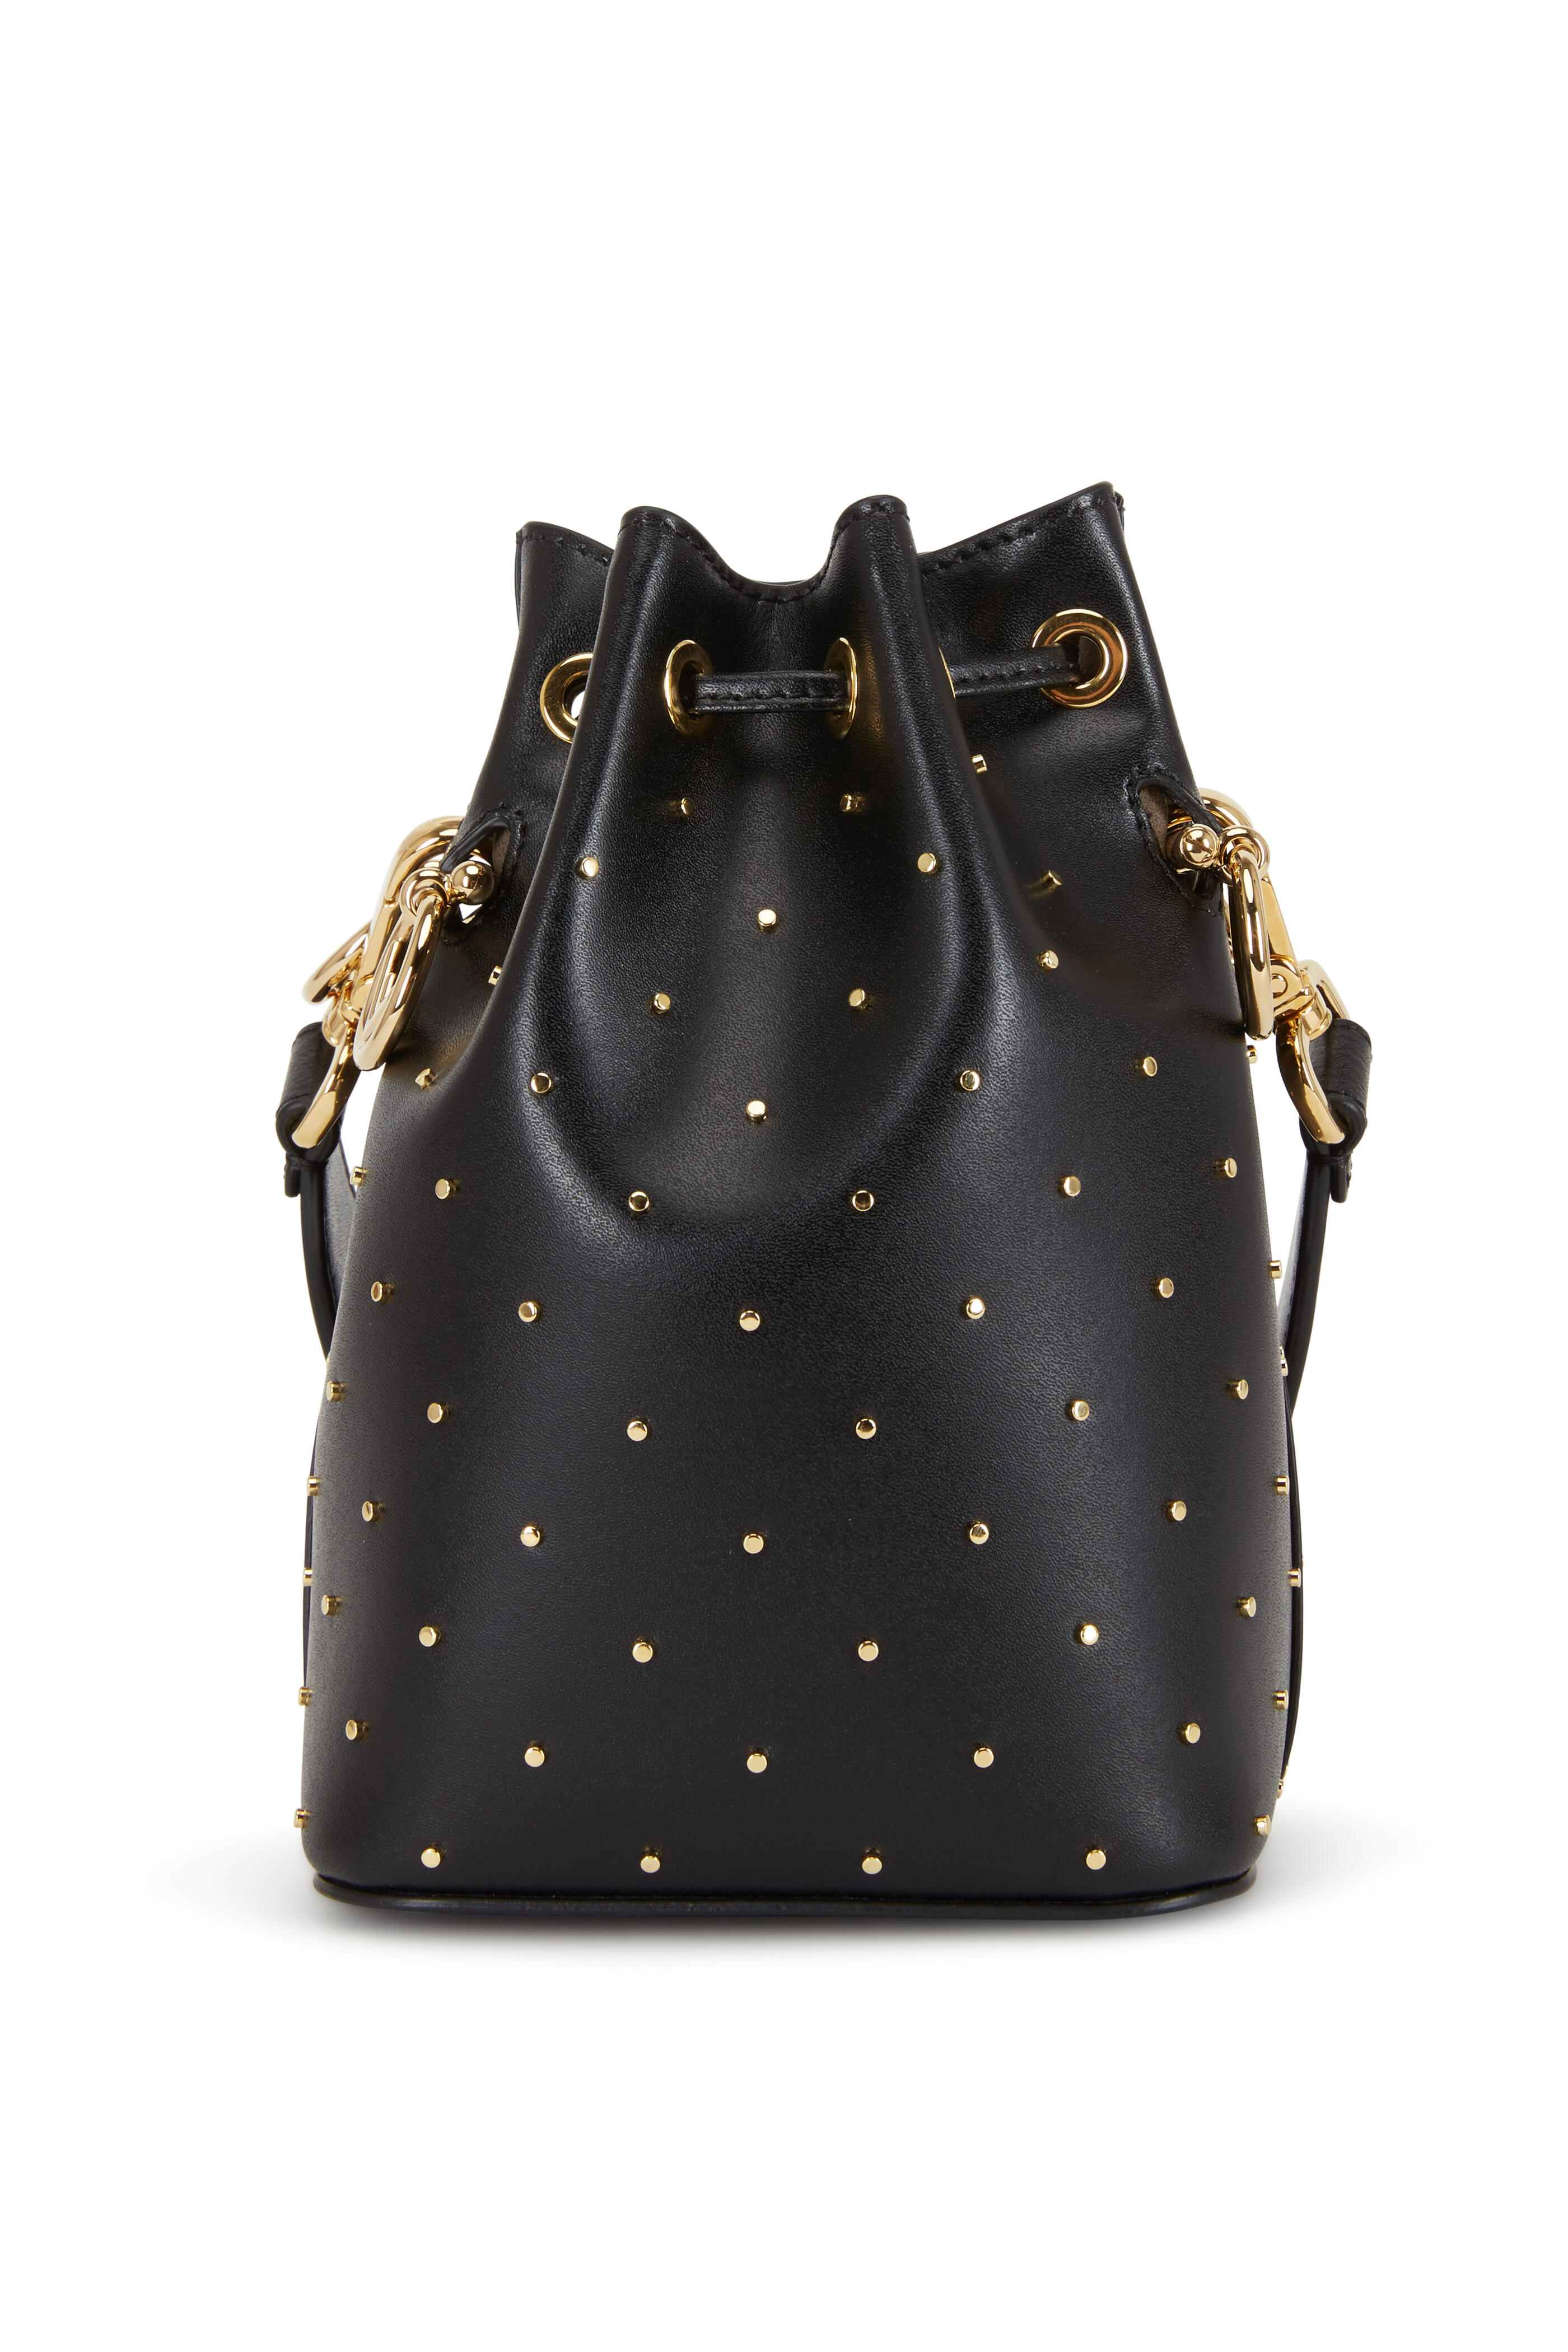 Fendi's Mon Trésor Bucket Bag Gets A Translucent Update — CNK Daily  (ChicksNKicks)